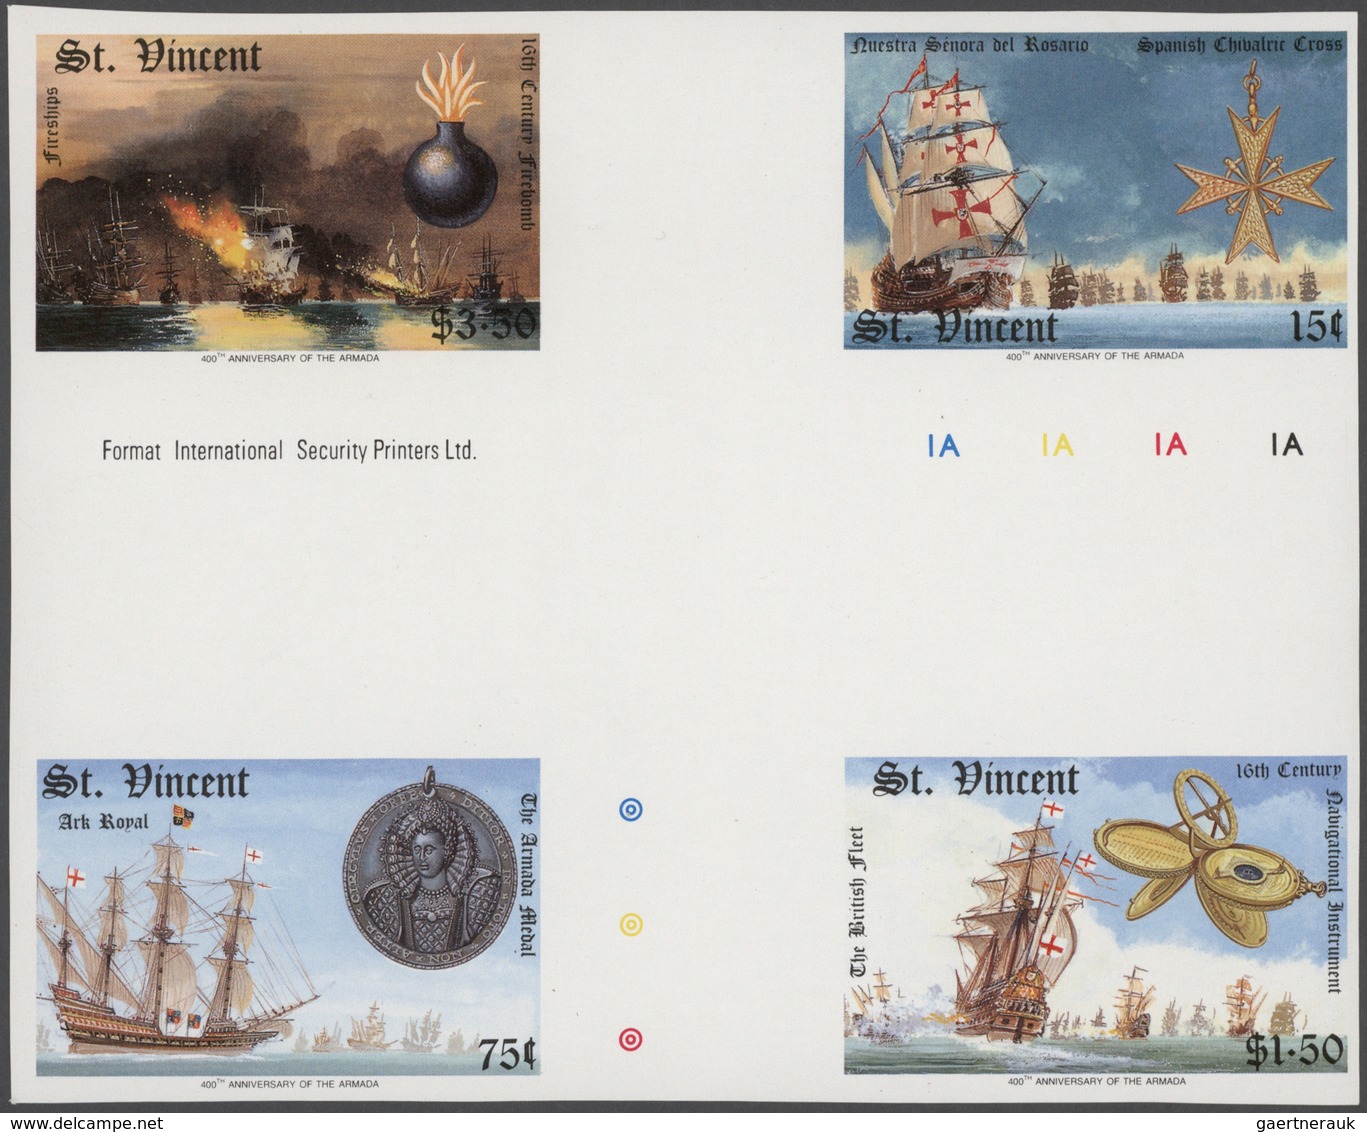 Thematische Philatelie: 1983/1988, St. Vincent. Large stock of imperforate proof progressive stamps